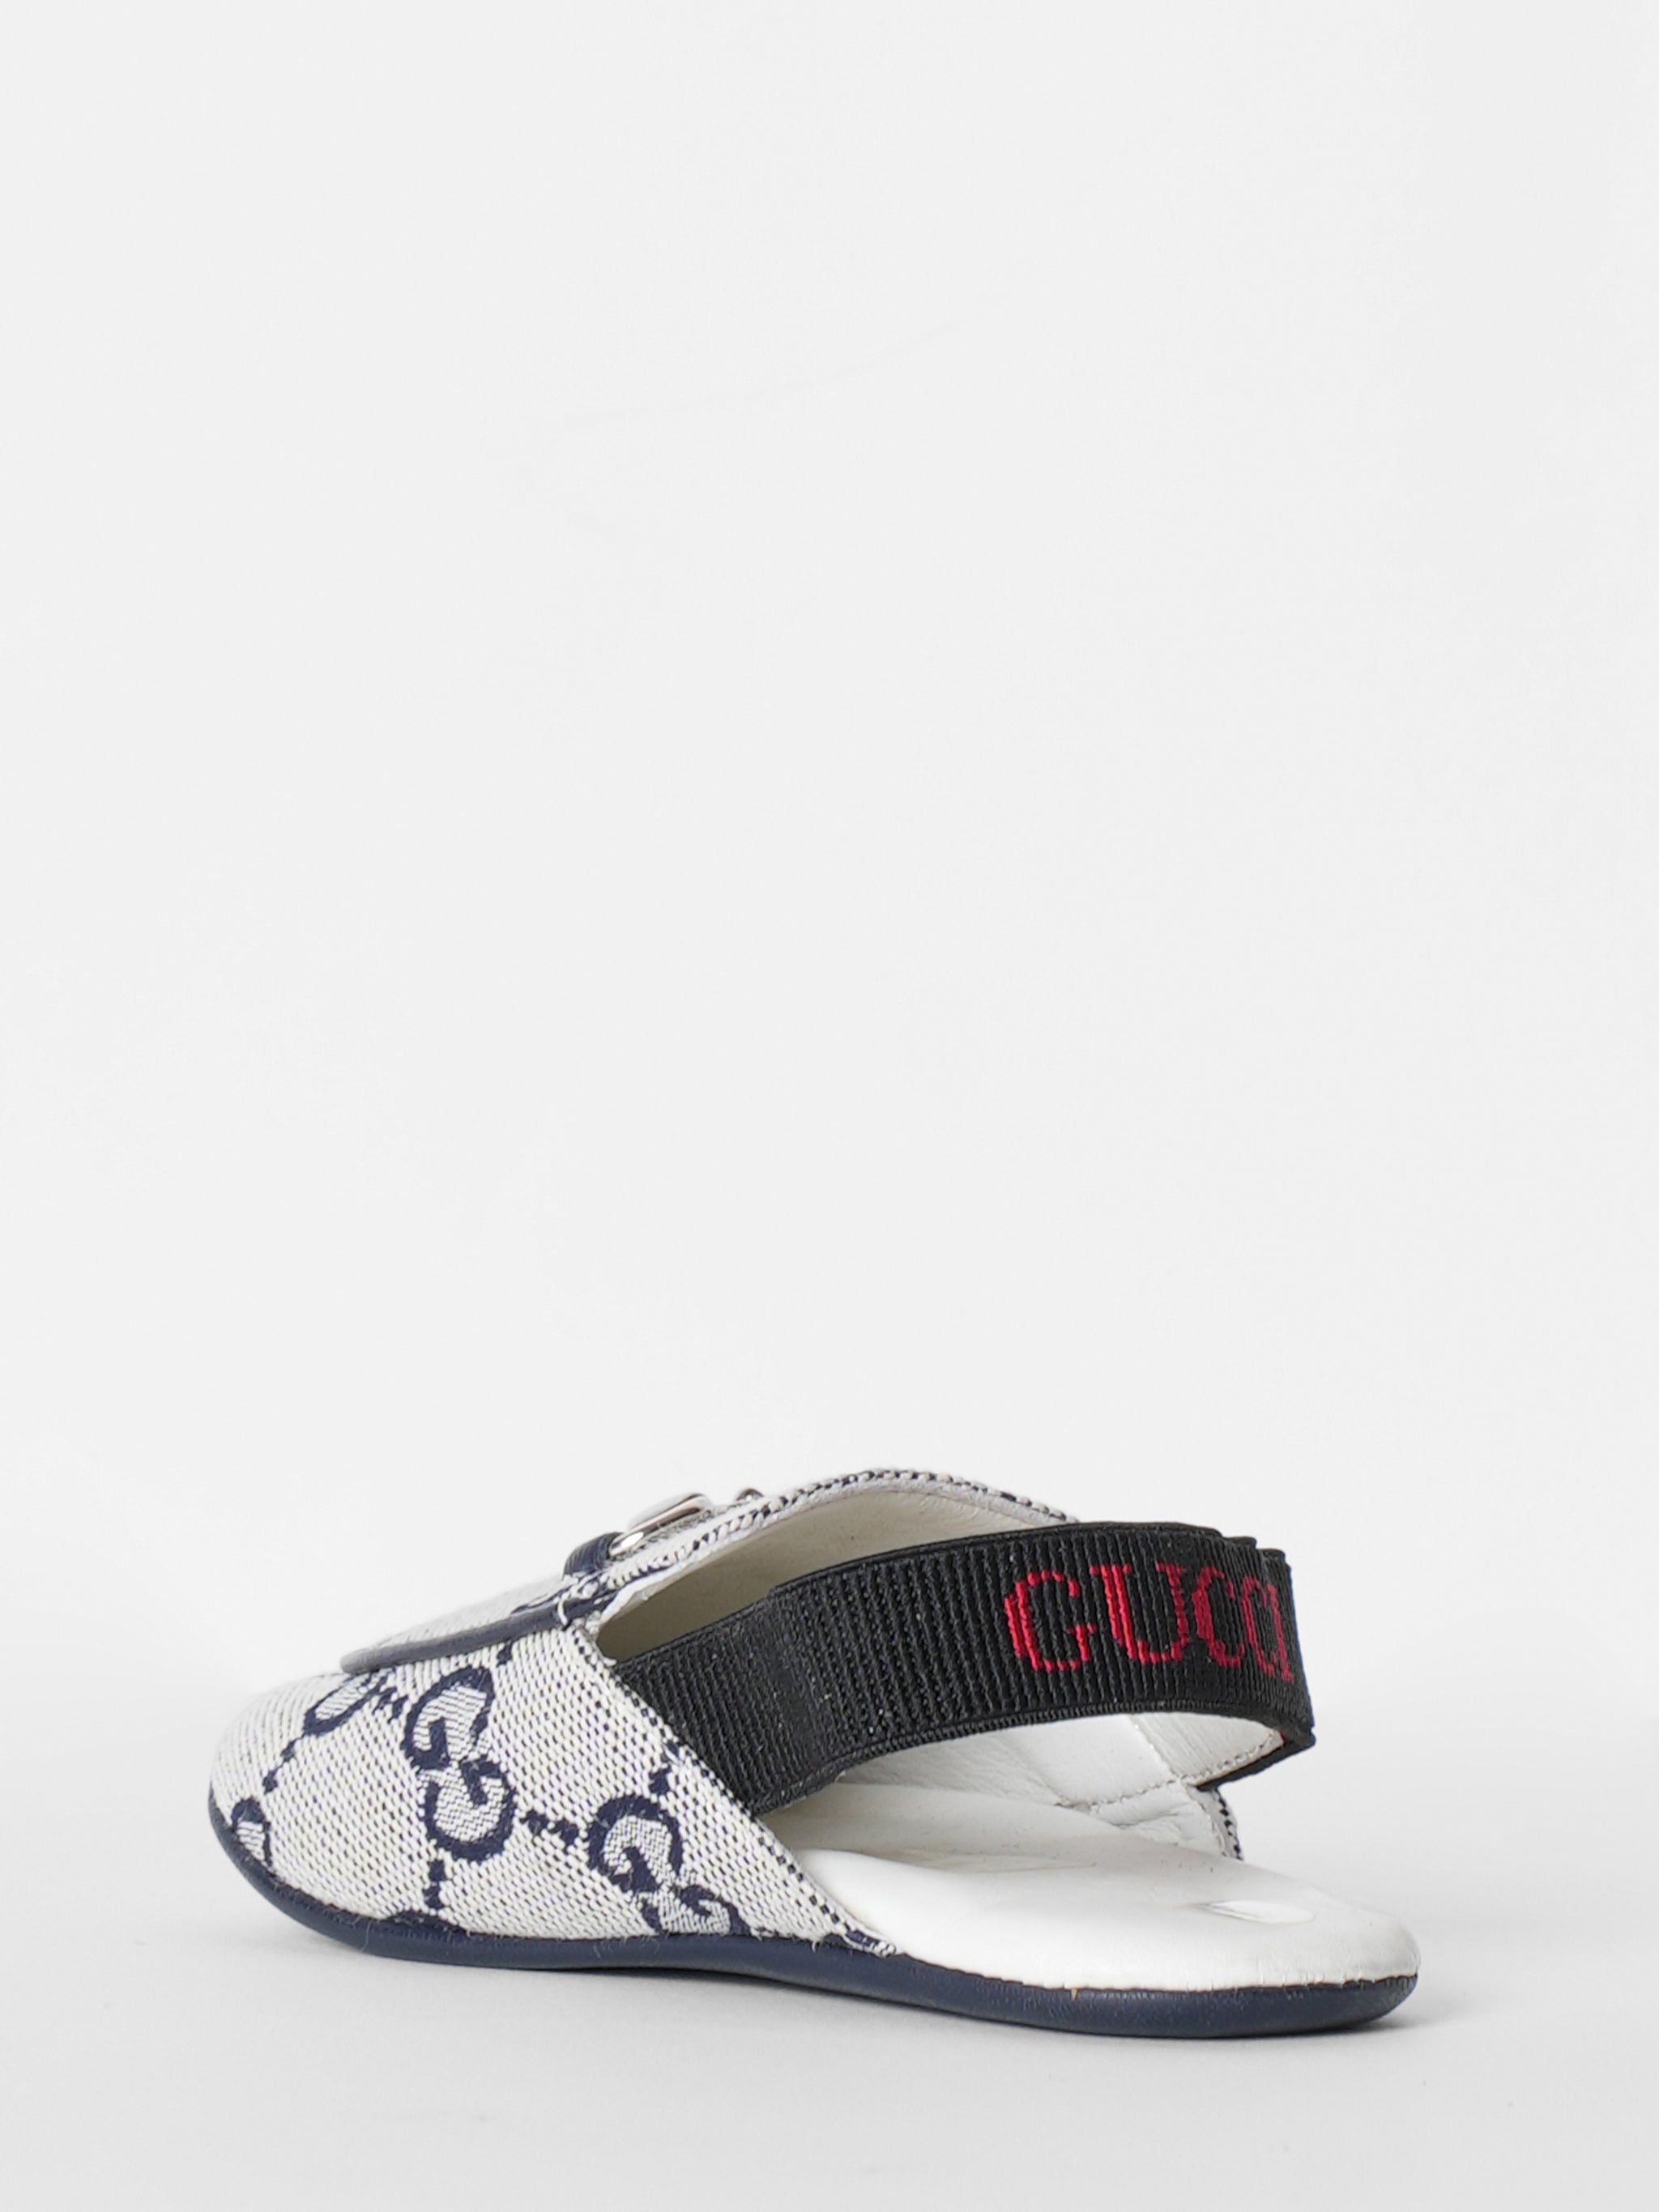 Shop Fake Gucci Slides For Women | Replica Designer Slippers & Sandals